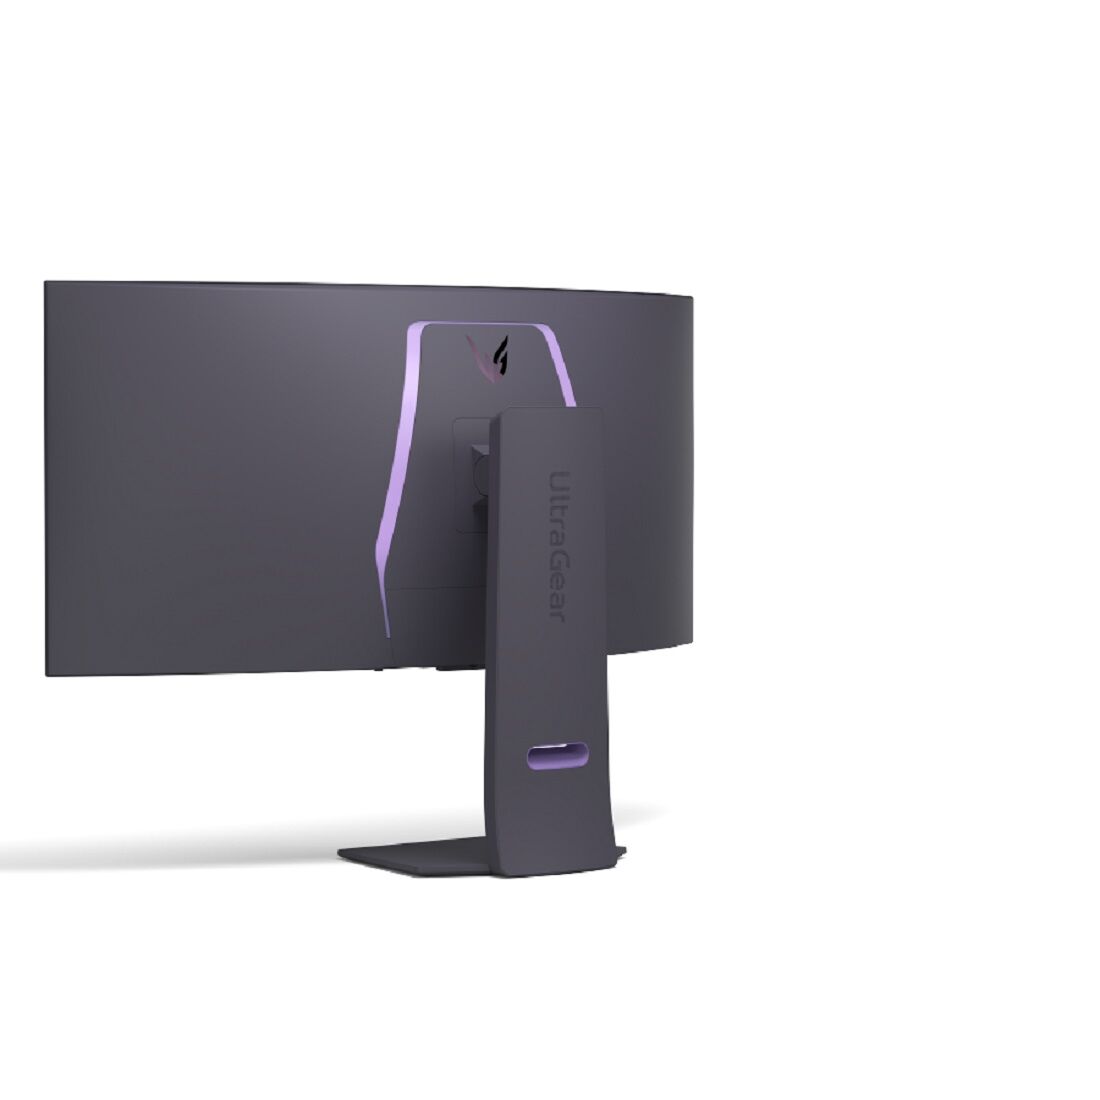 LG prezentuje nowe monitory gamingowe - UltraGear OLED 3